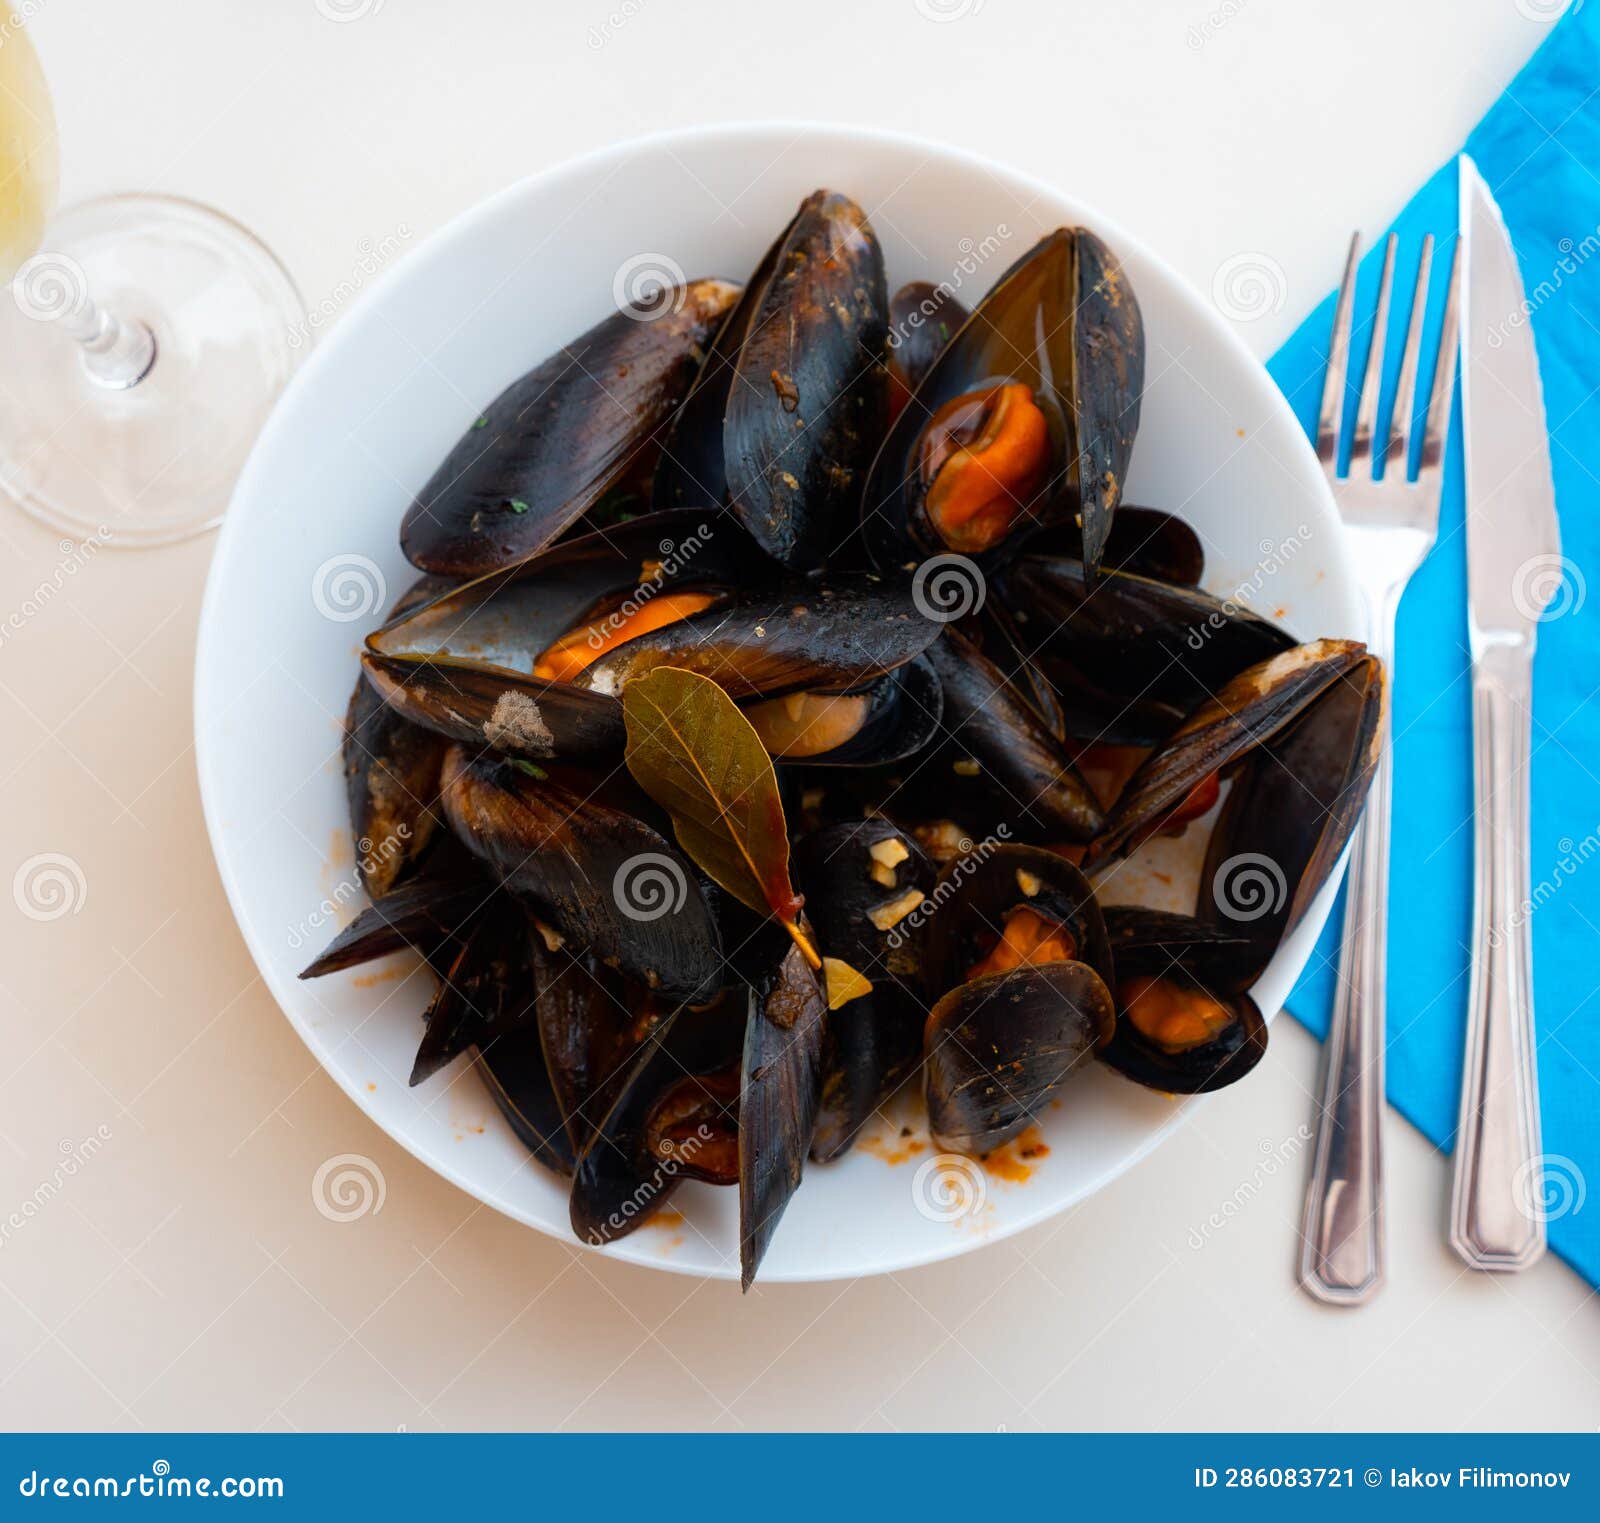 mejillon a la marinera, traditional spanish cuisine, clams in shells